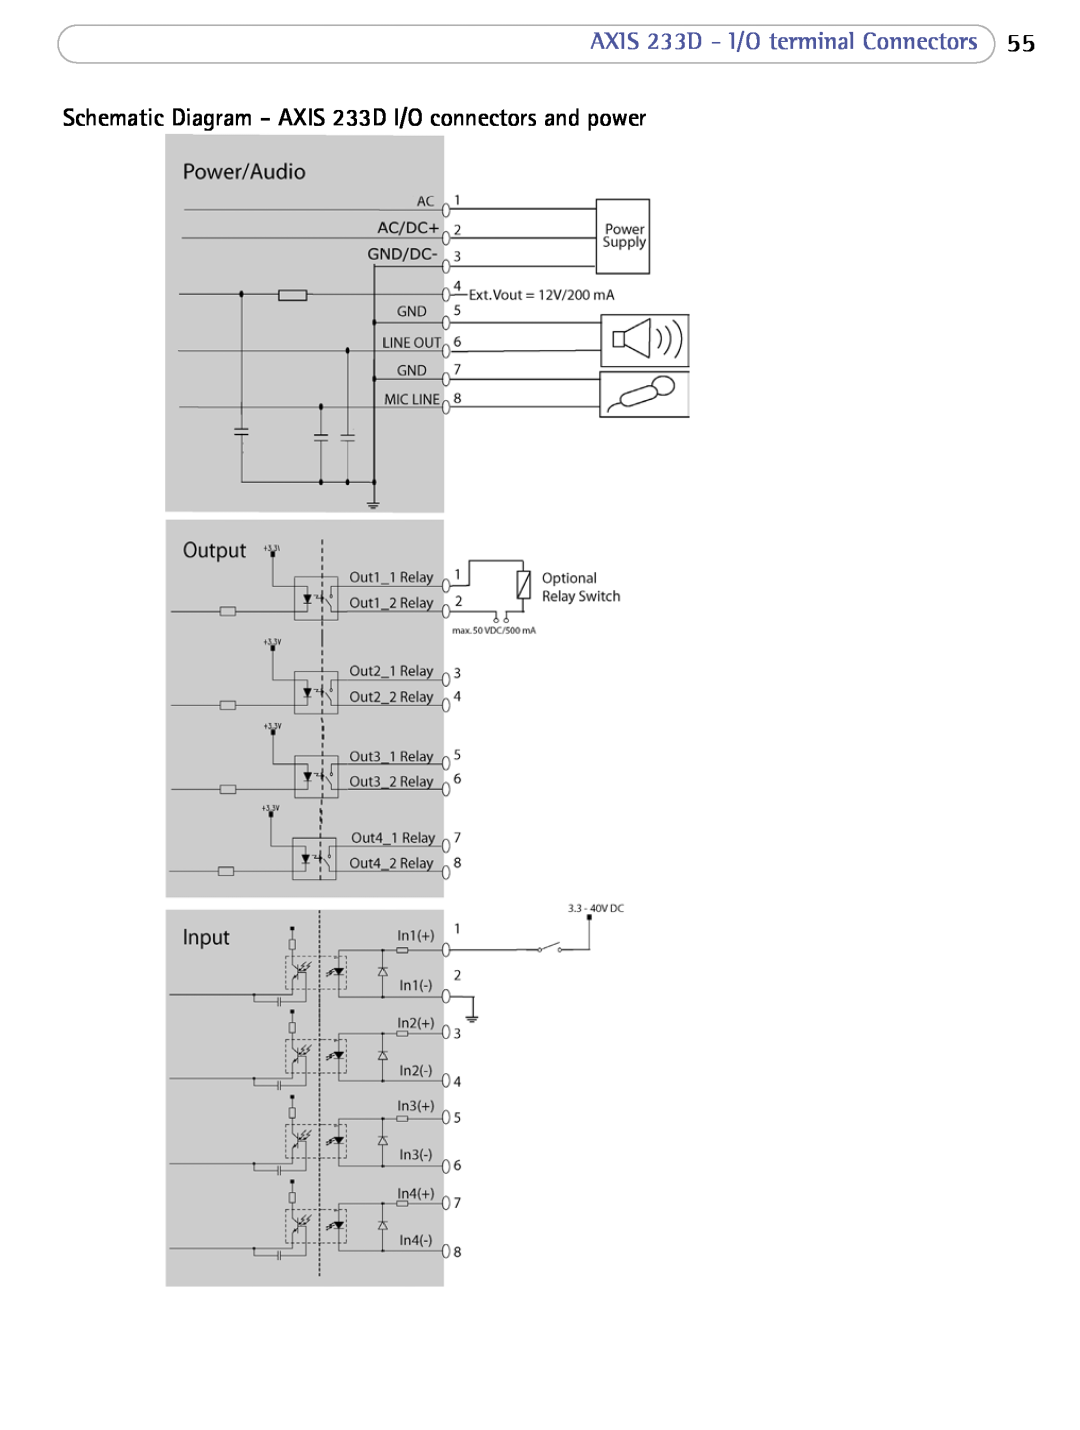 Axis Communications Schematic Diagram - AXIS 233D I/O connectors and power, AXIS 233D - I/O terminal Connectors 